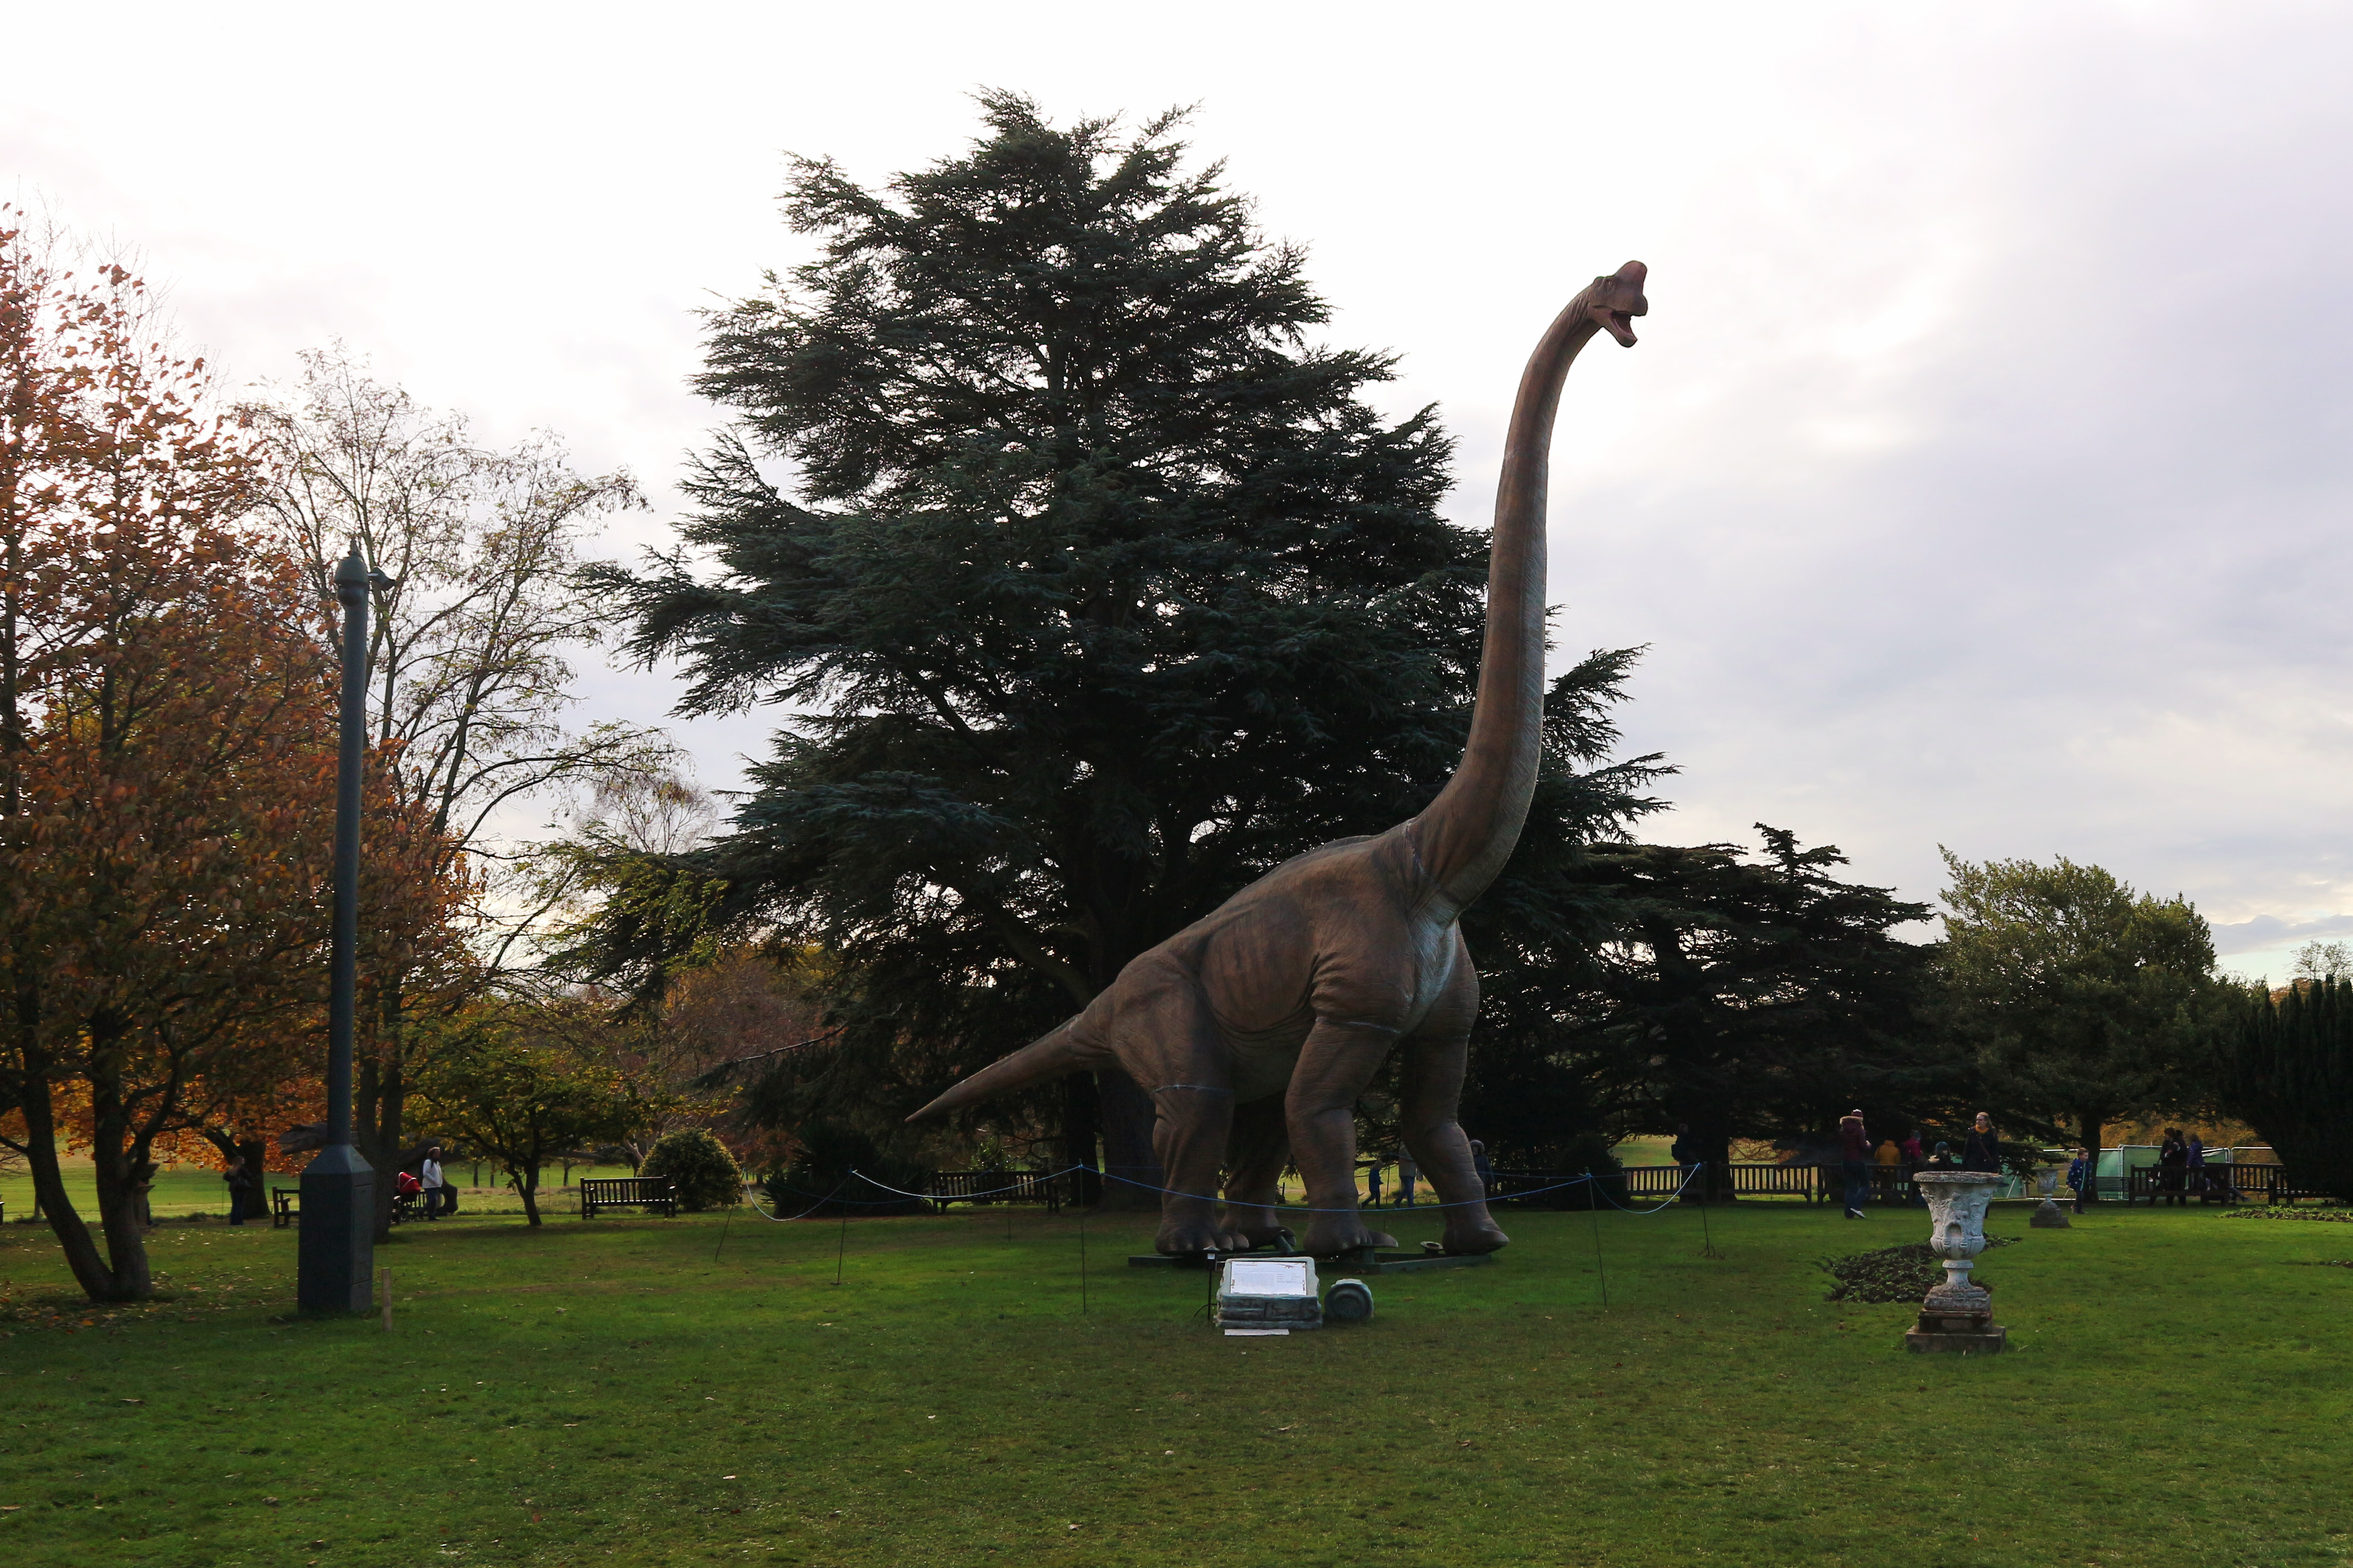 Jurassic Kingdom at Wollaton Park